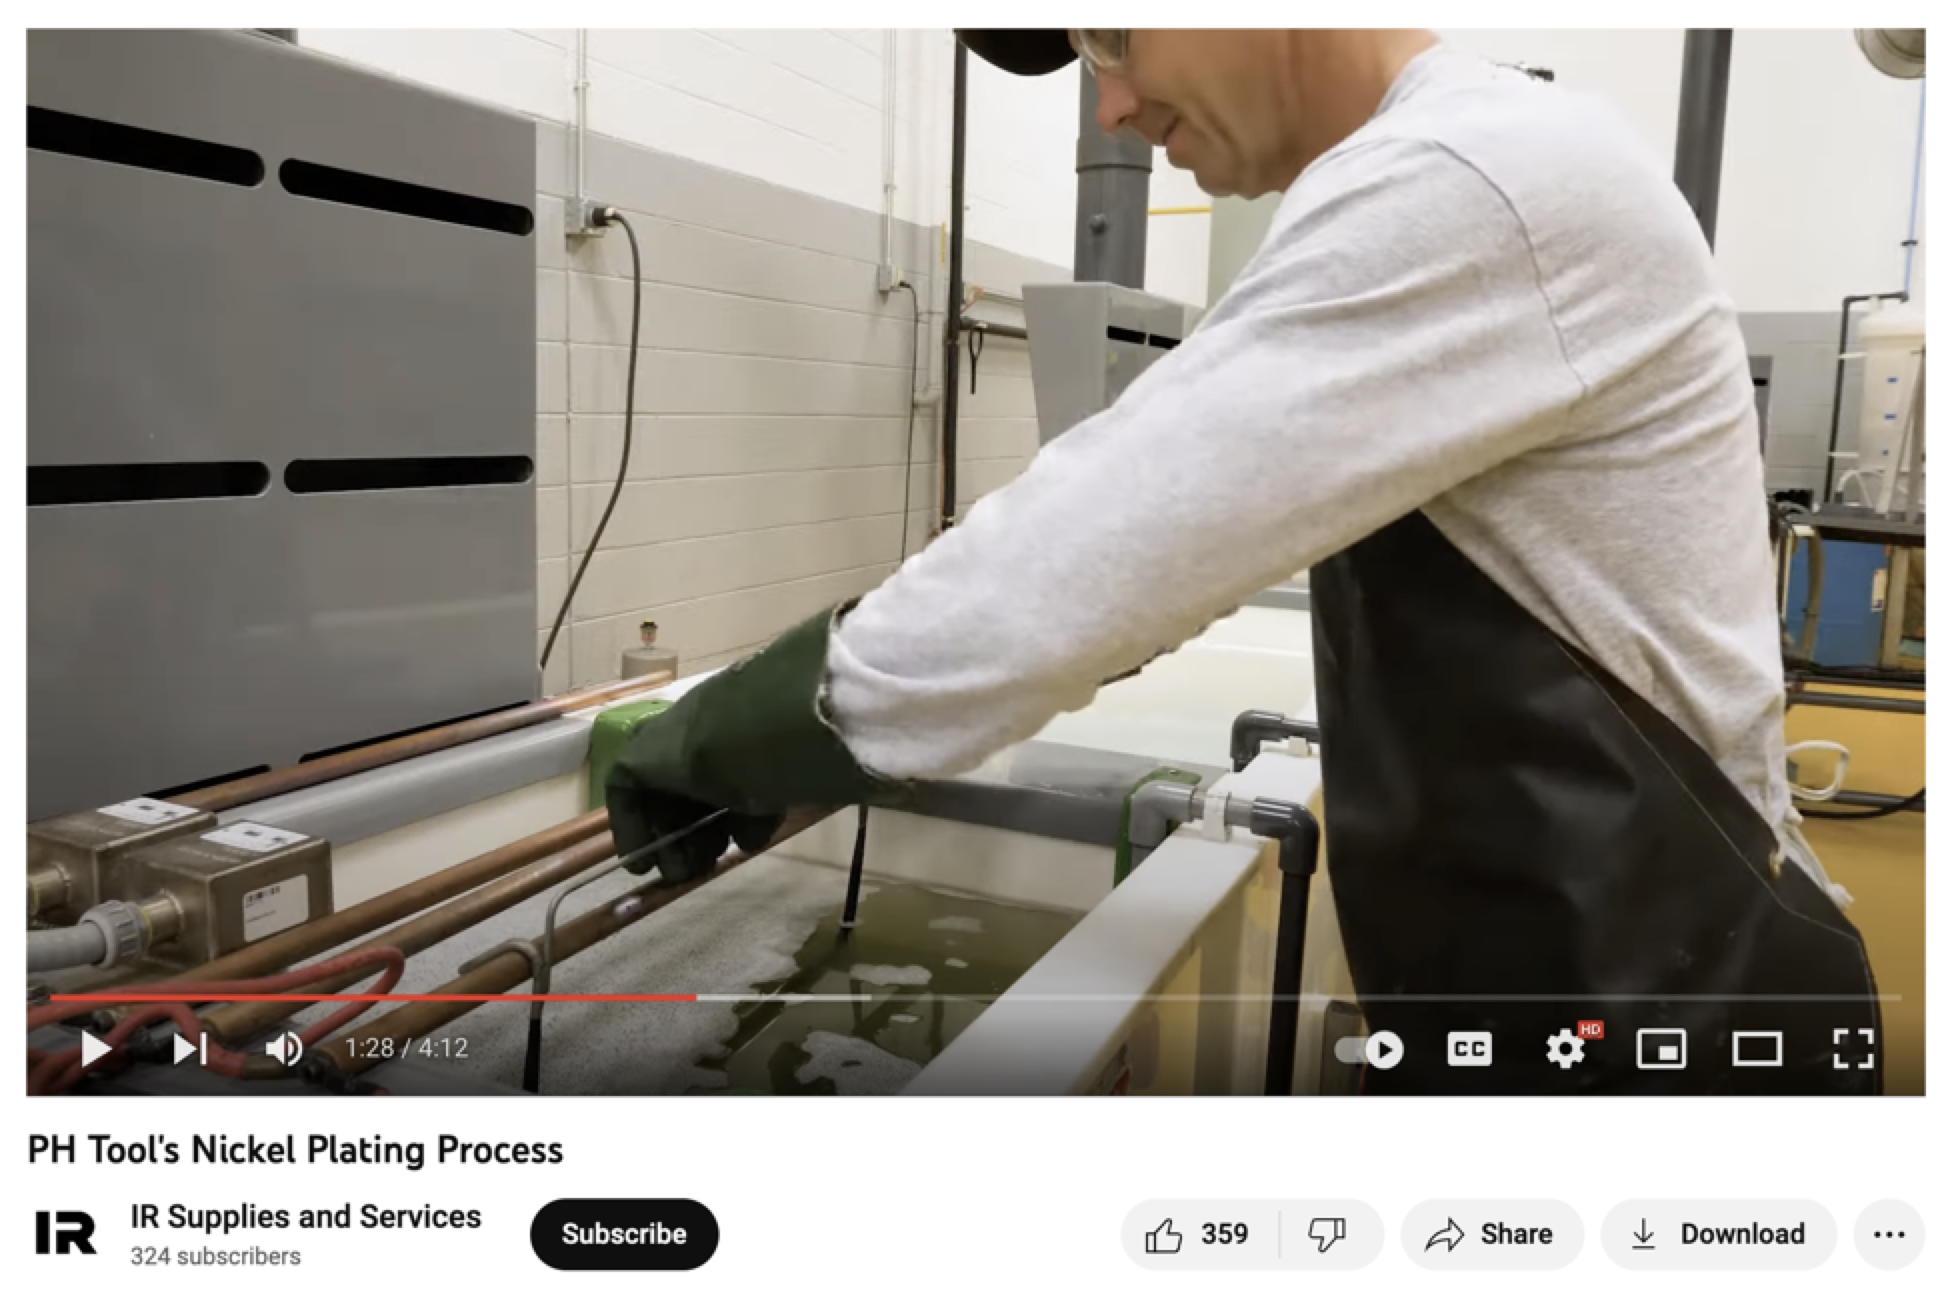 “PH工具镀镍过程”YouTube视频截图